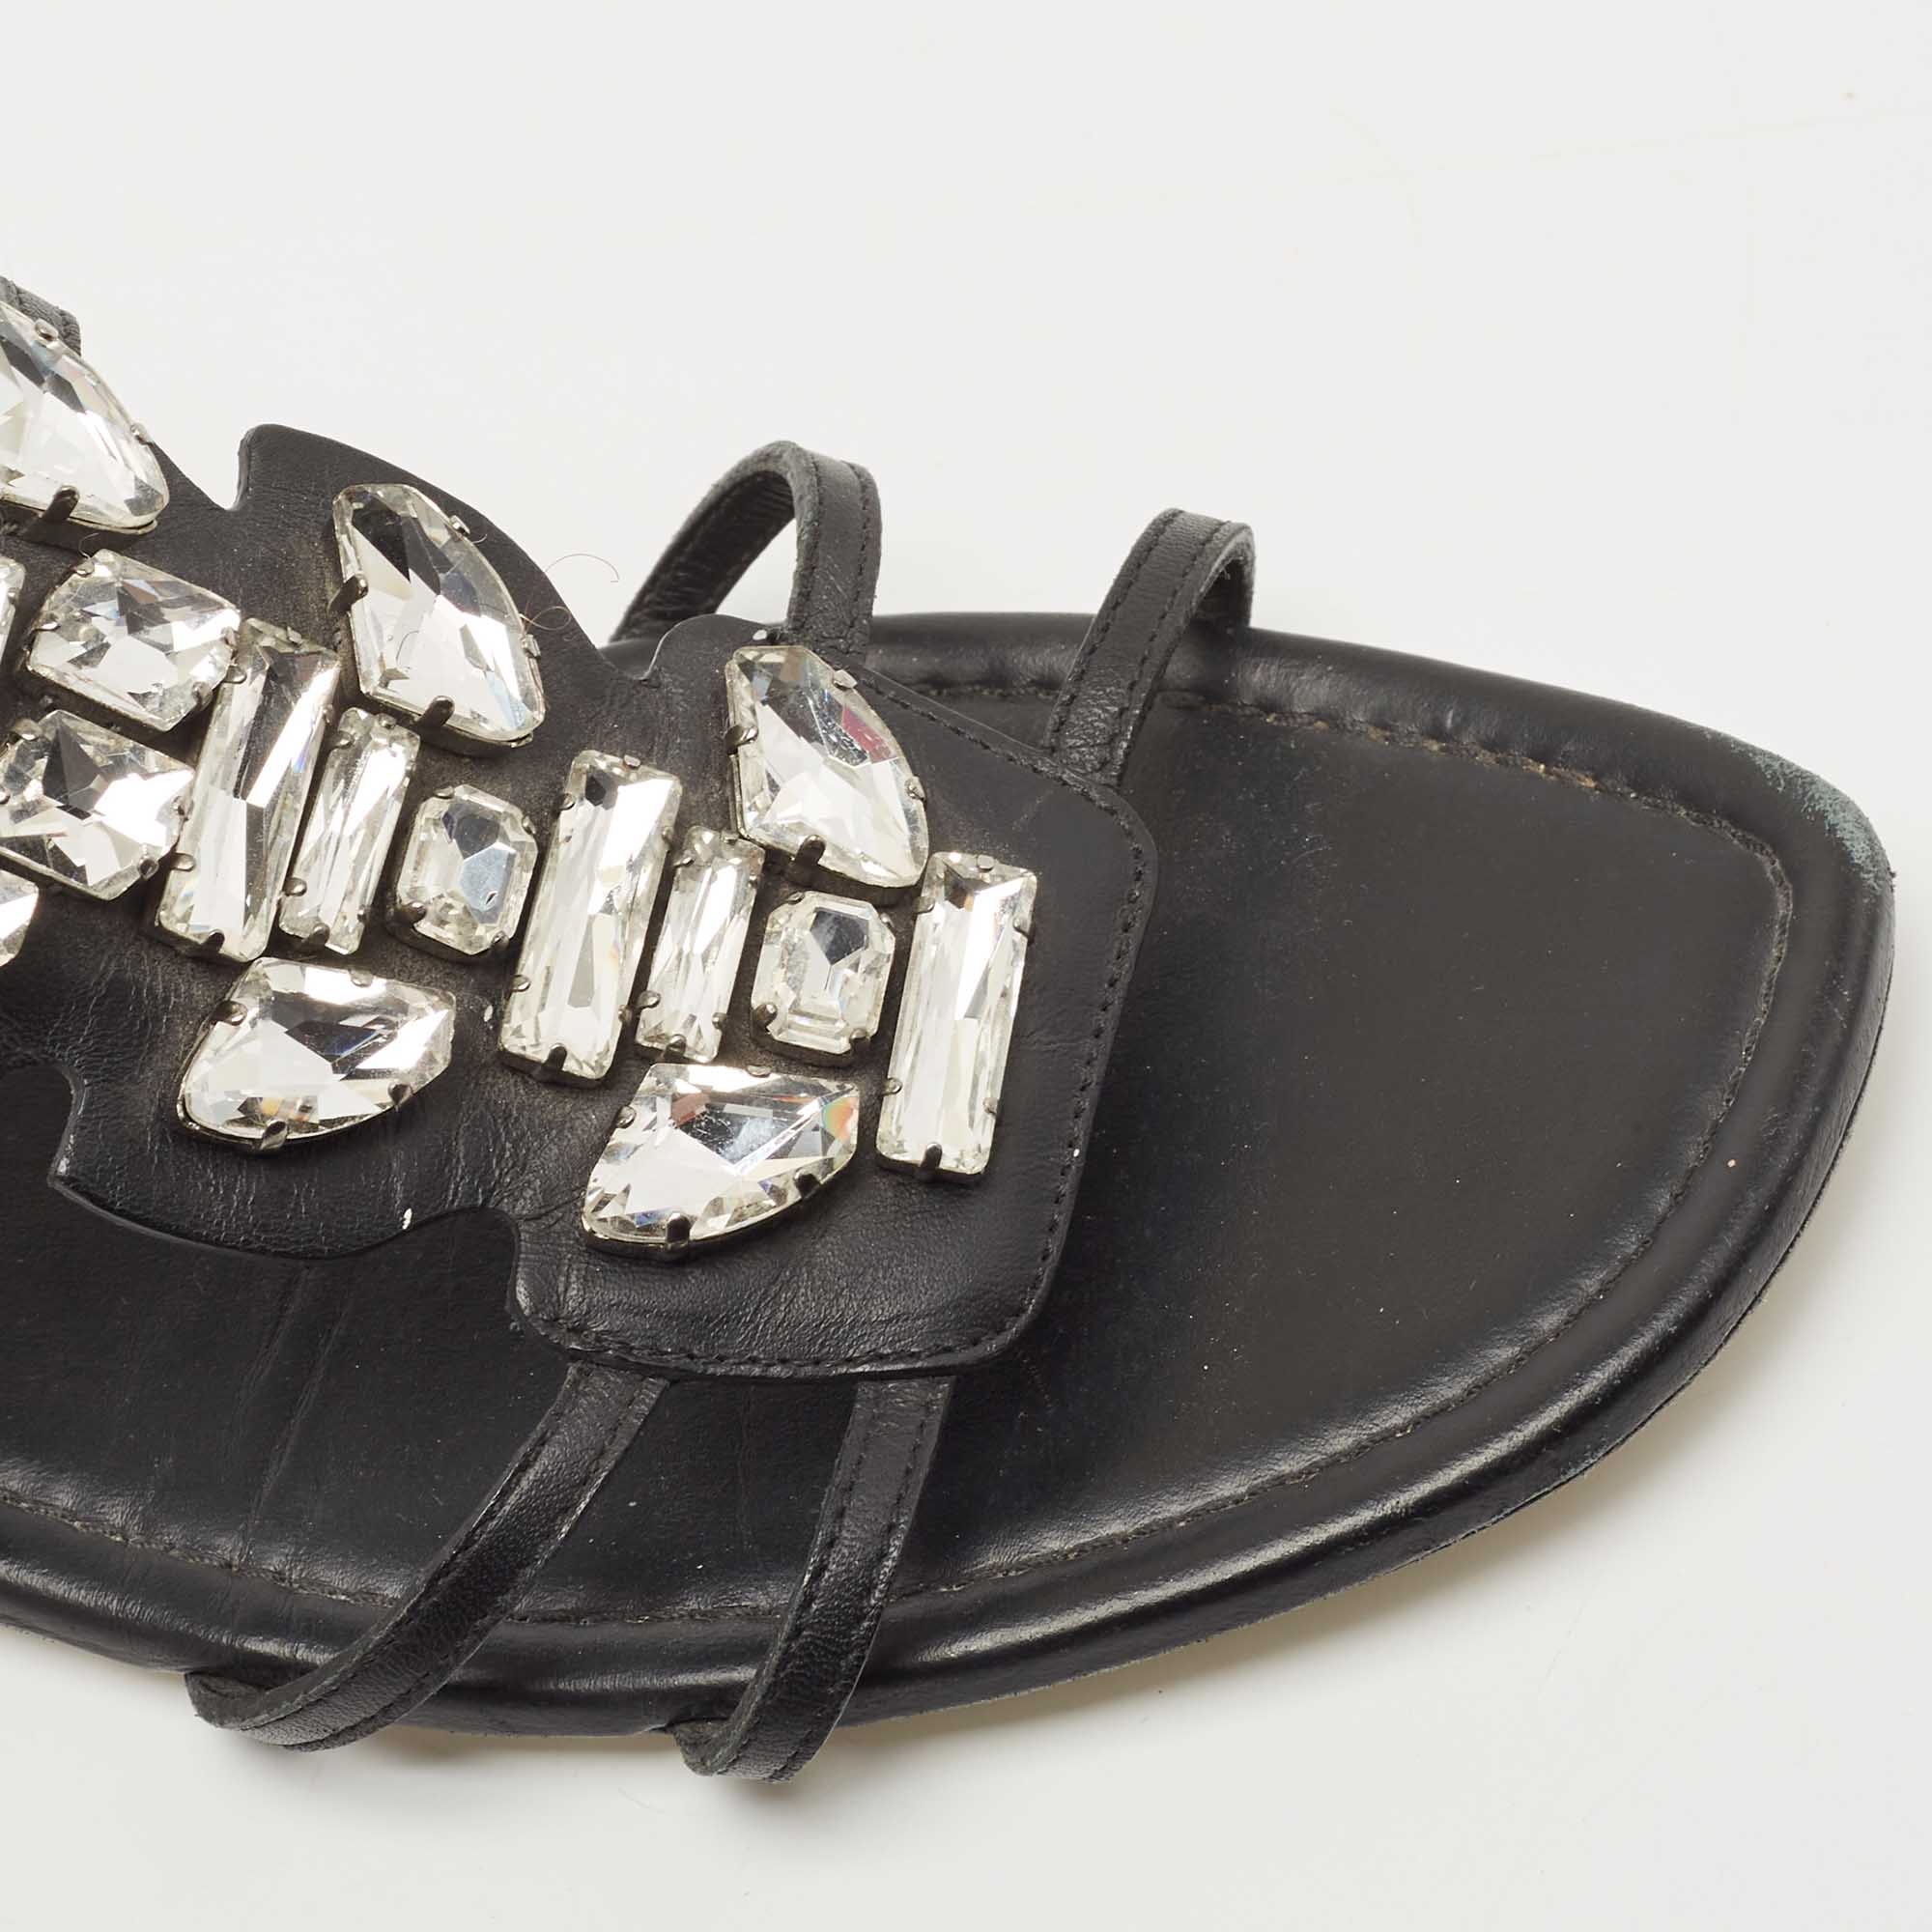 Fendi Black Leather Crystal Embellished Strappy Ankle Strap Flat Sandals Size 37